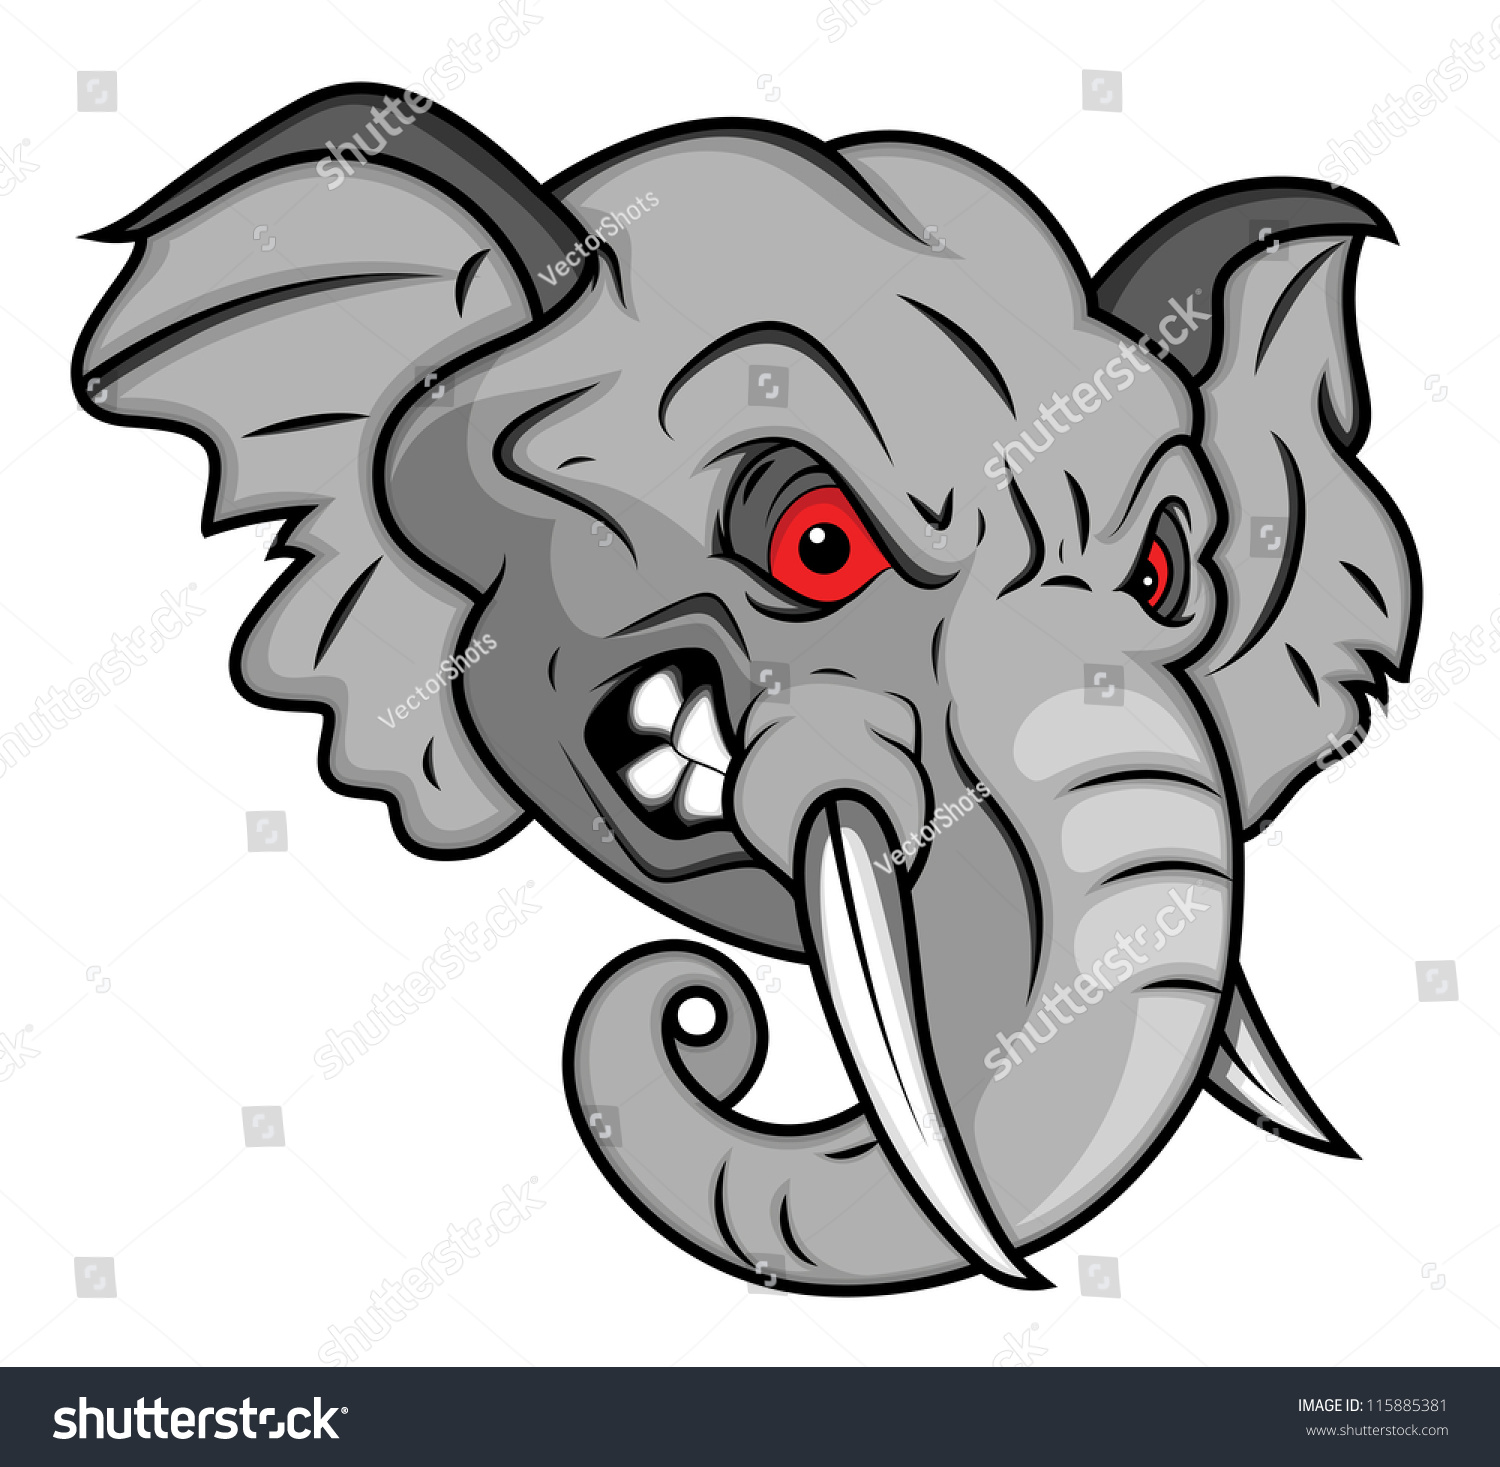 elephant mascot clipart - photo #26